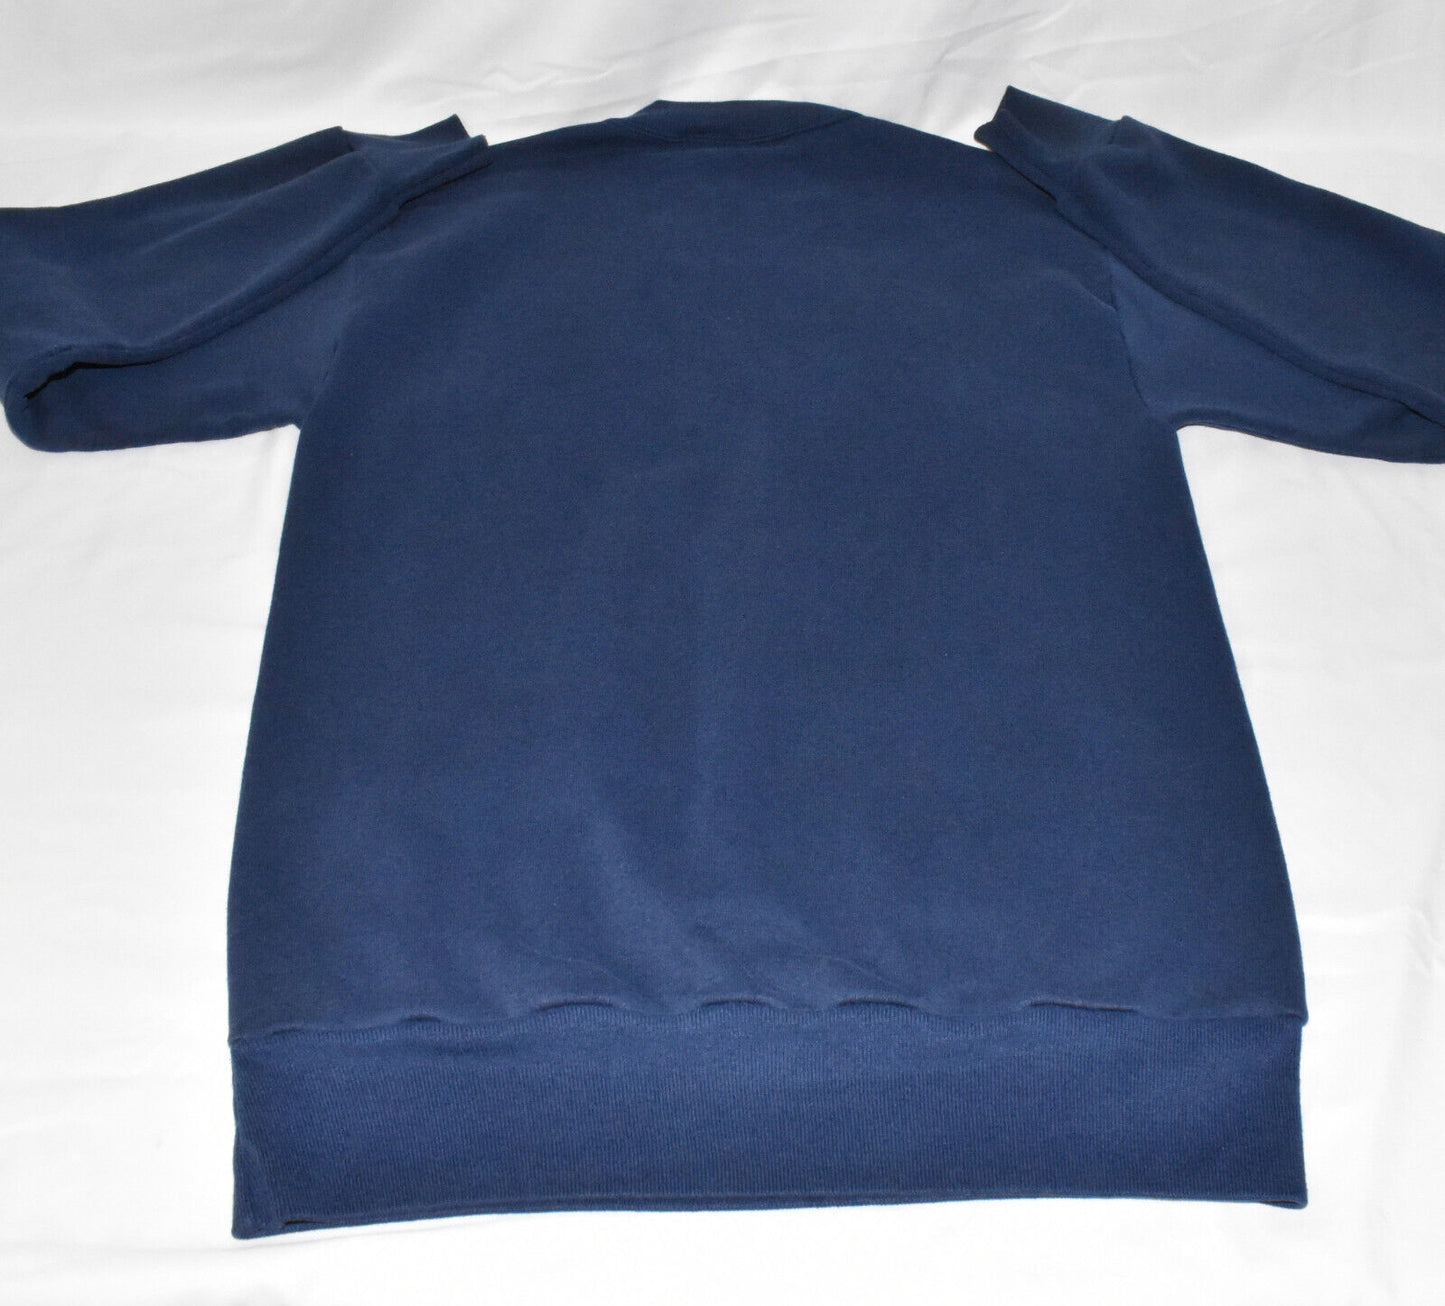 Vintage 1992 Dallas Cowboys National Football League Sweatshirt Blue Small or Medium